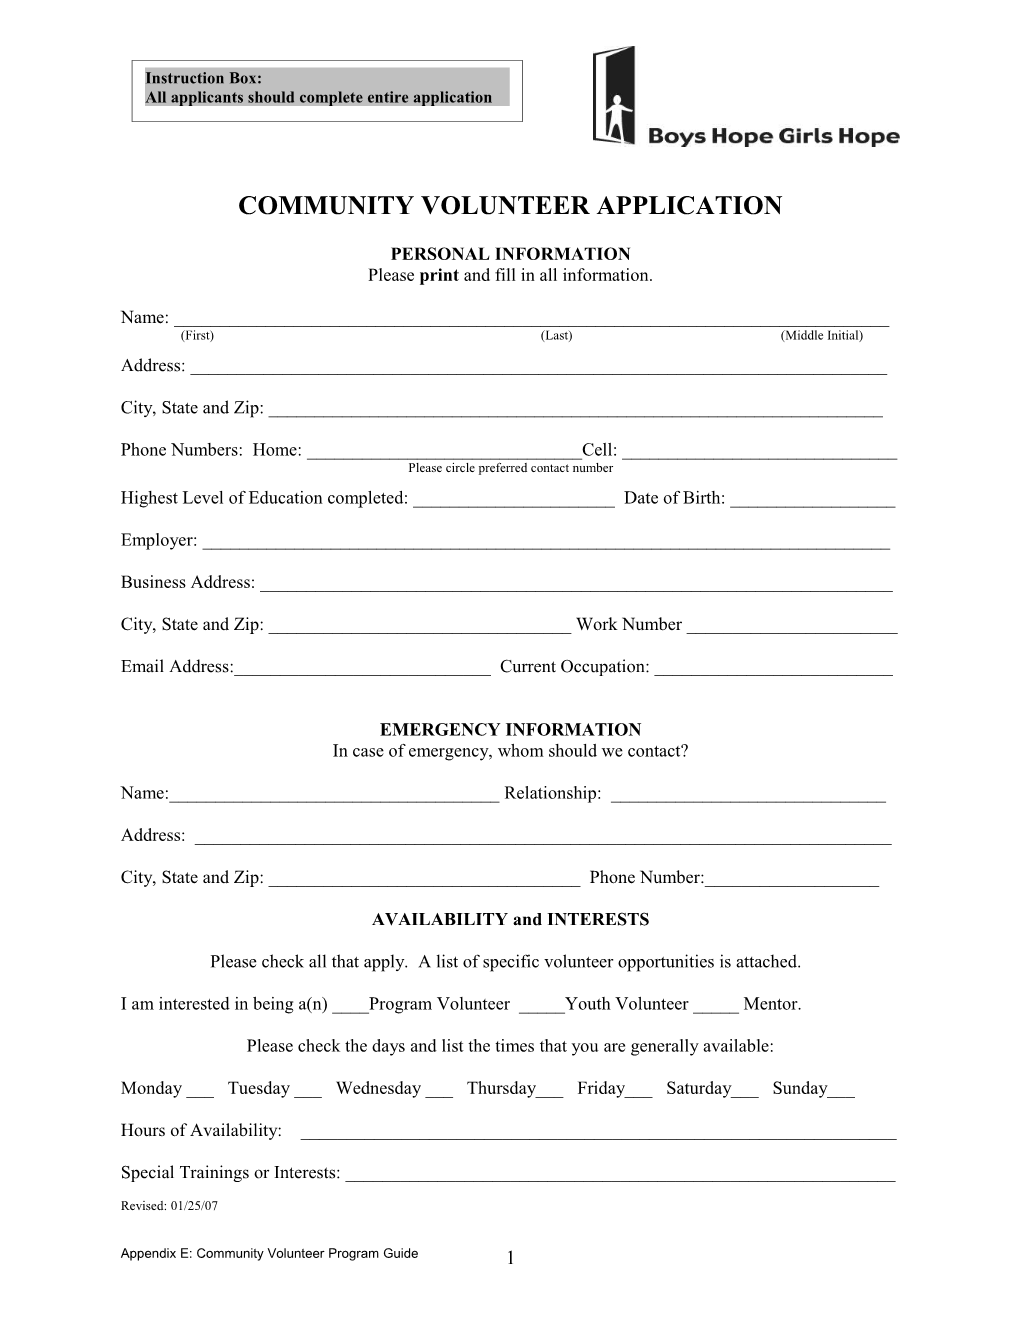 Community Volunteer Program Guide, Appendix E: Community Volunteer Application